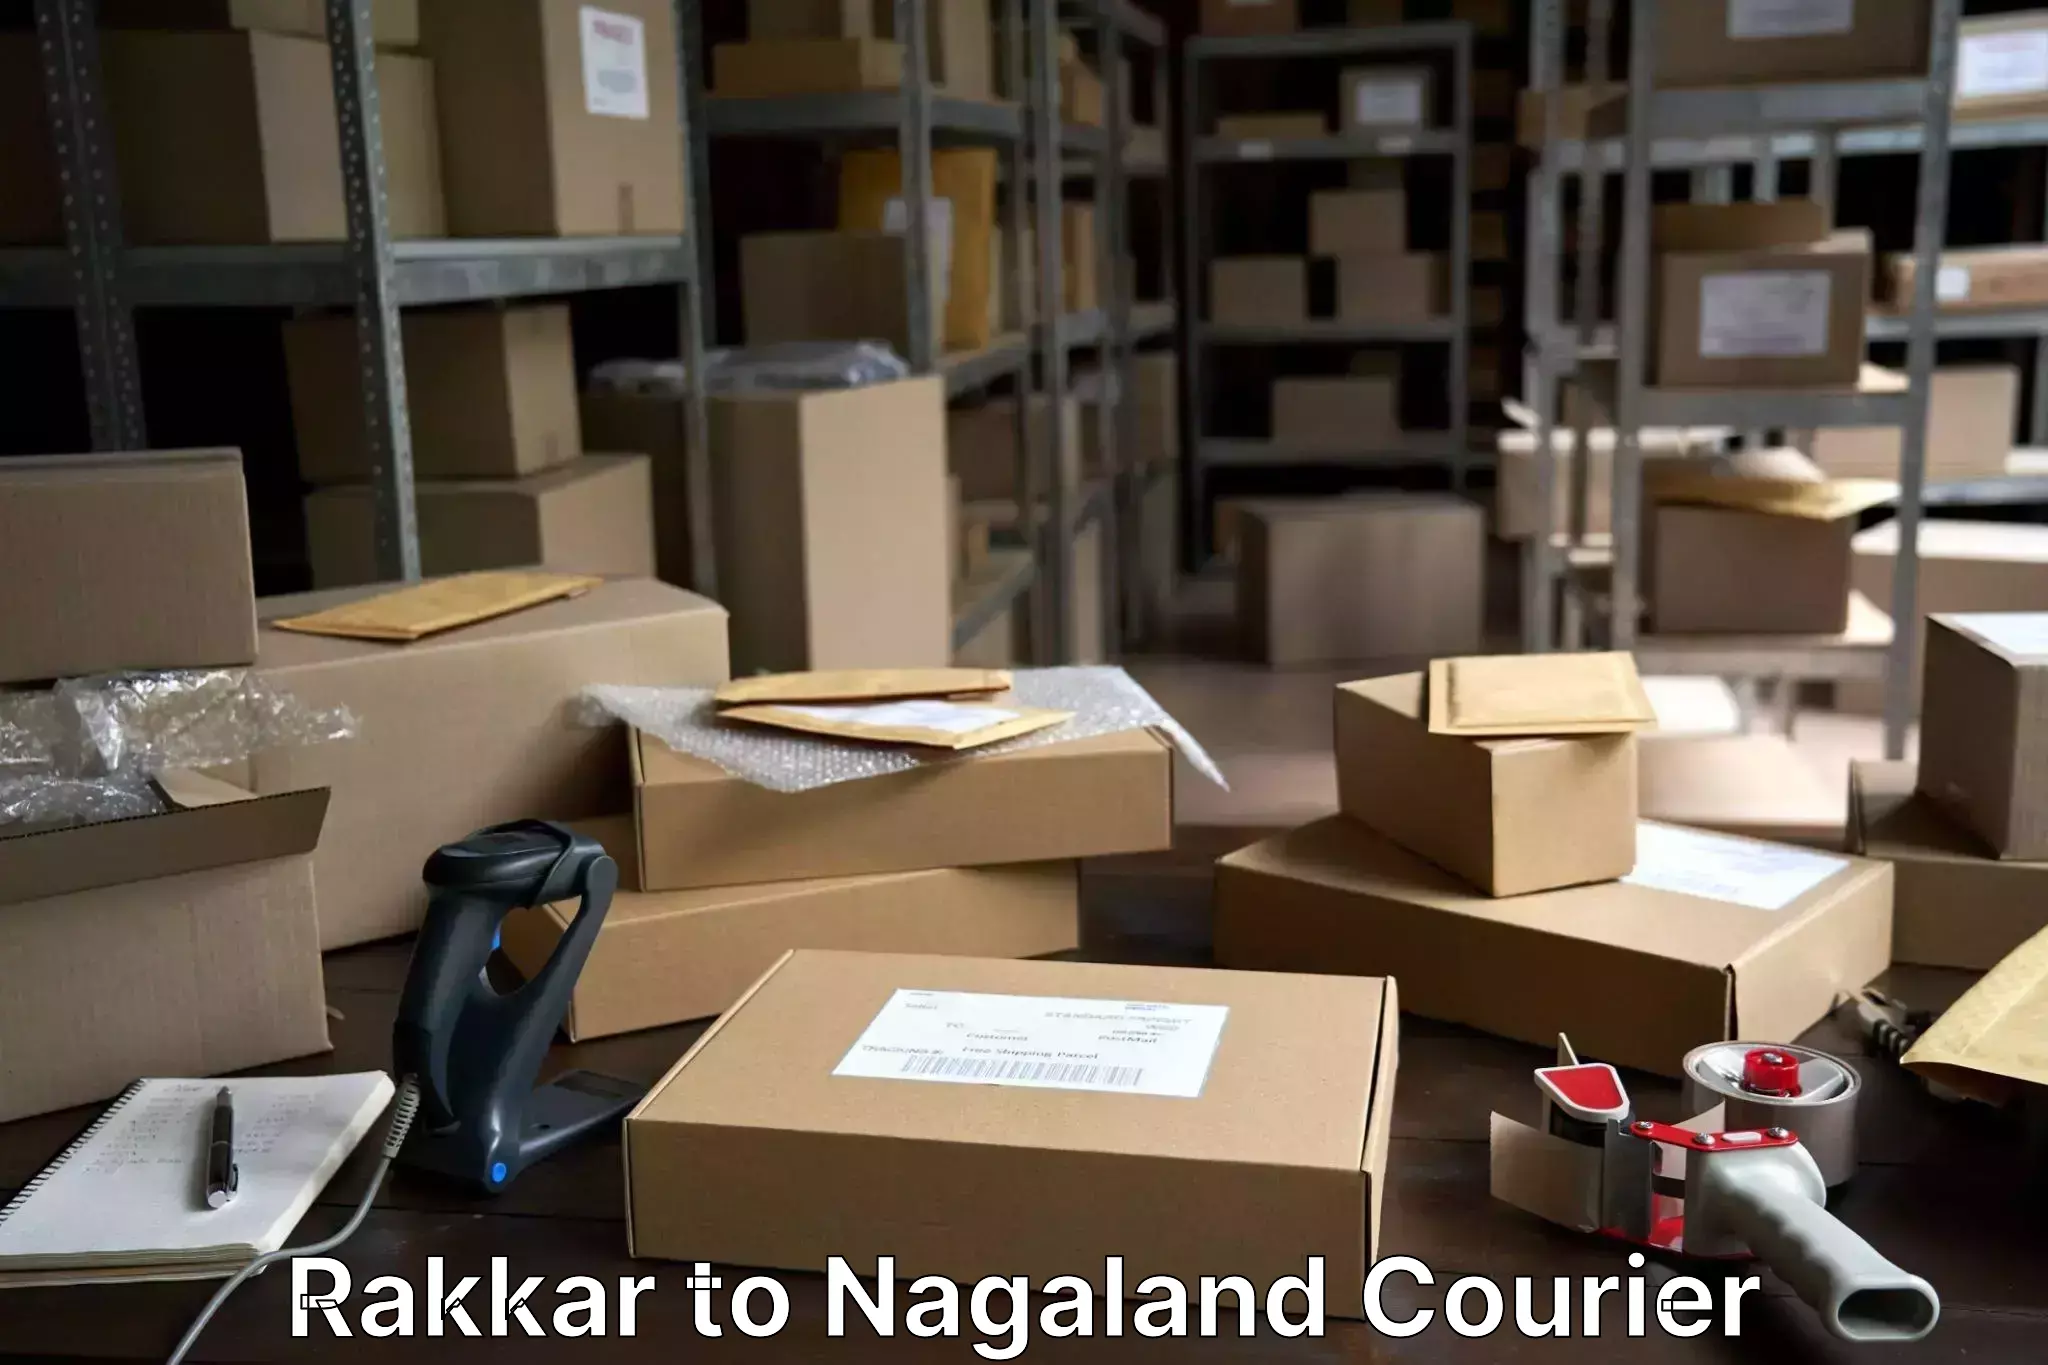 Baggage transport network Rakkar to Nagaland